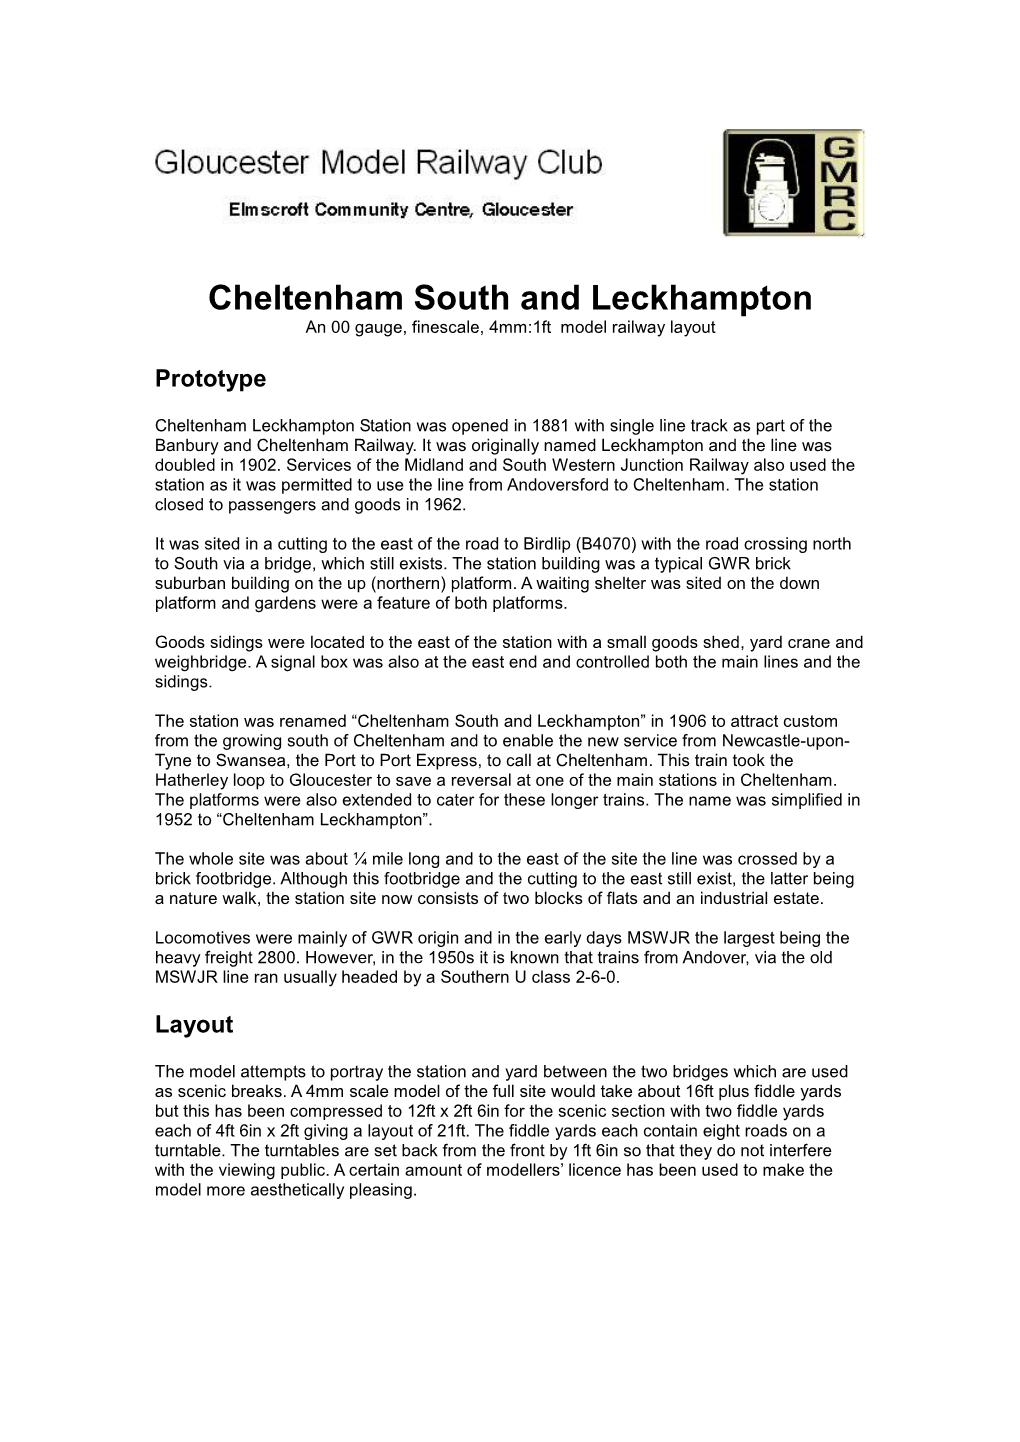 Cheltenham South and Leckhampton an 00 Gauge, Finescale, 4Mm:1Ft Model Railway Layout